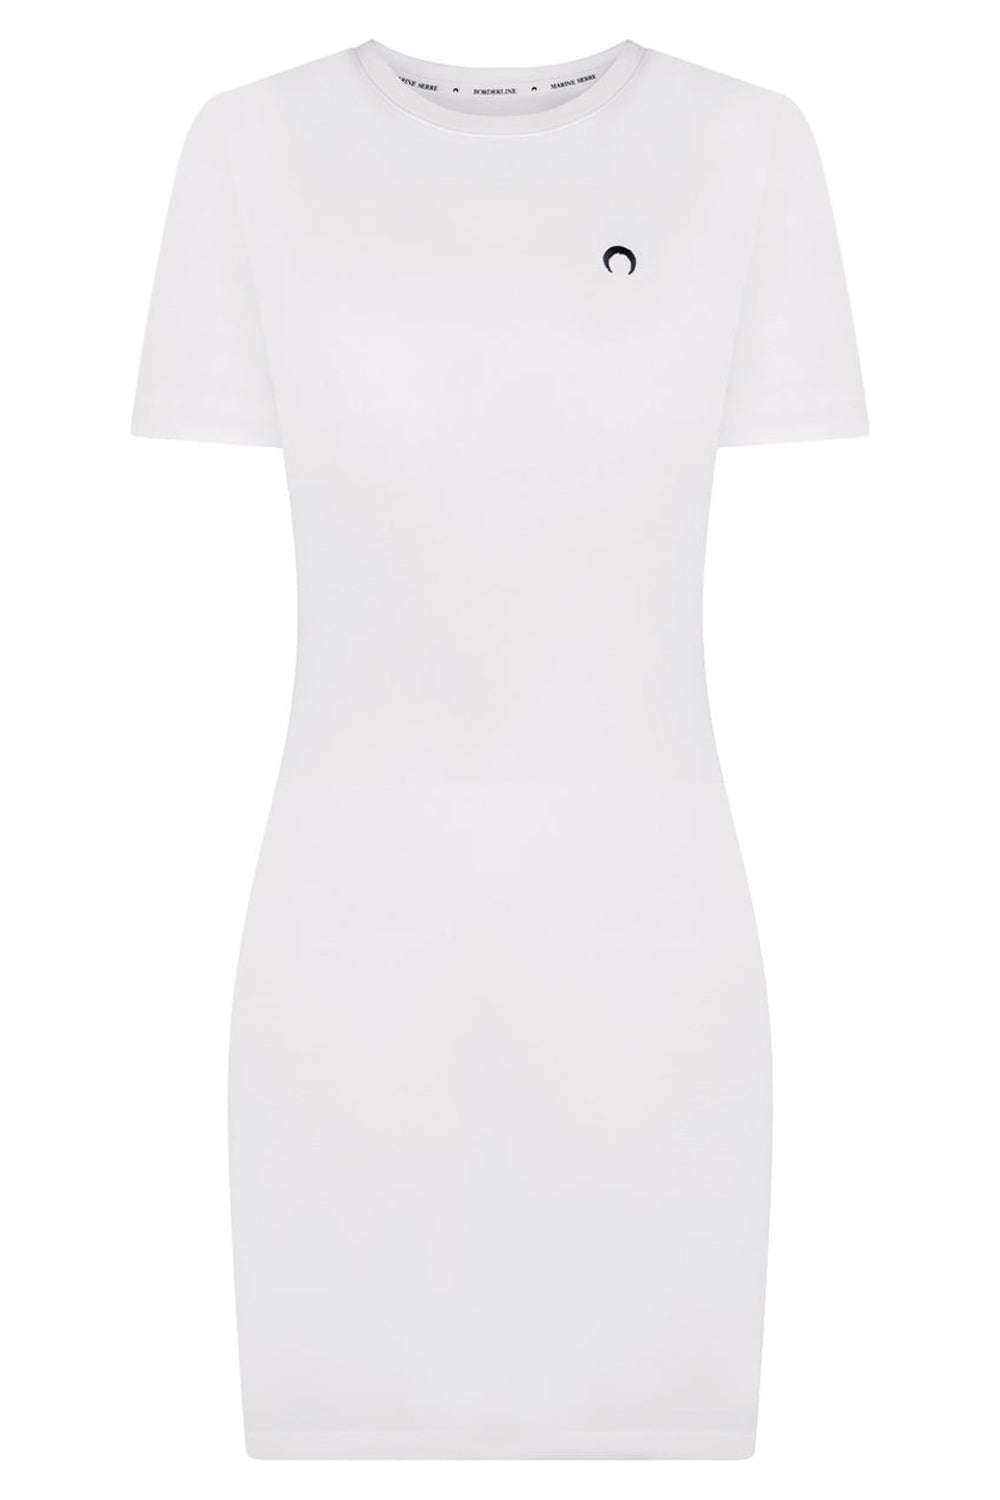 MARINE SERRE SHORT T-SHIRT DRESS WHITE NEW SEASON PARLOUR X SYDNEY ...